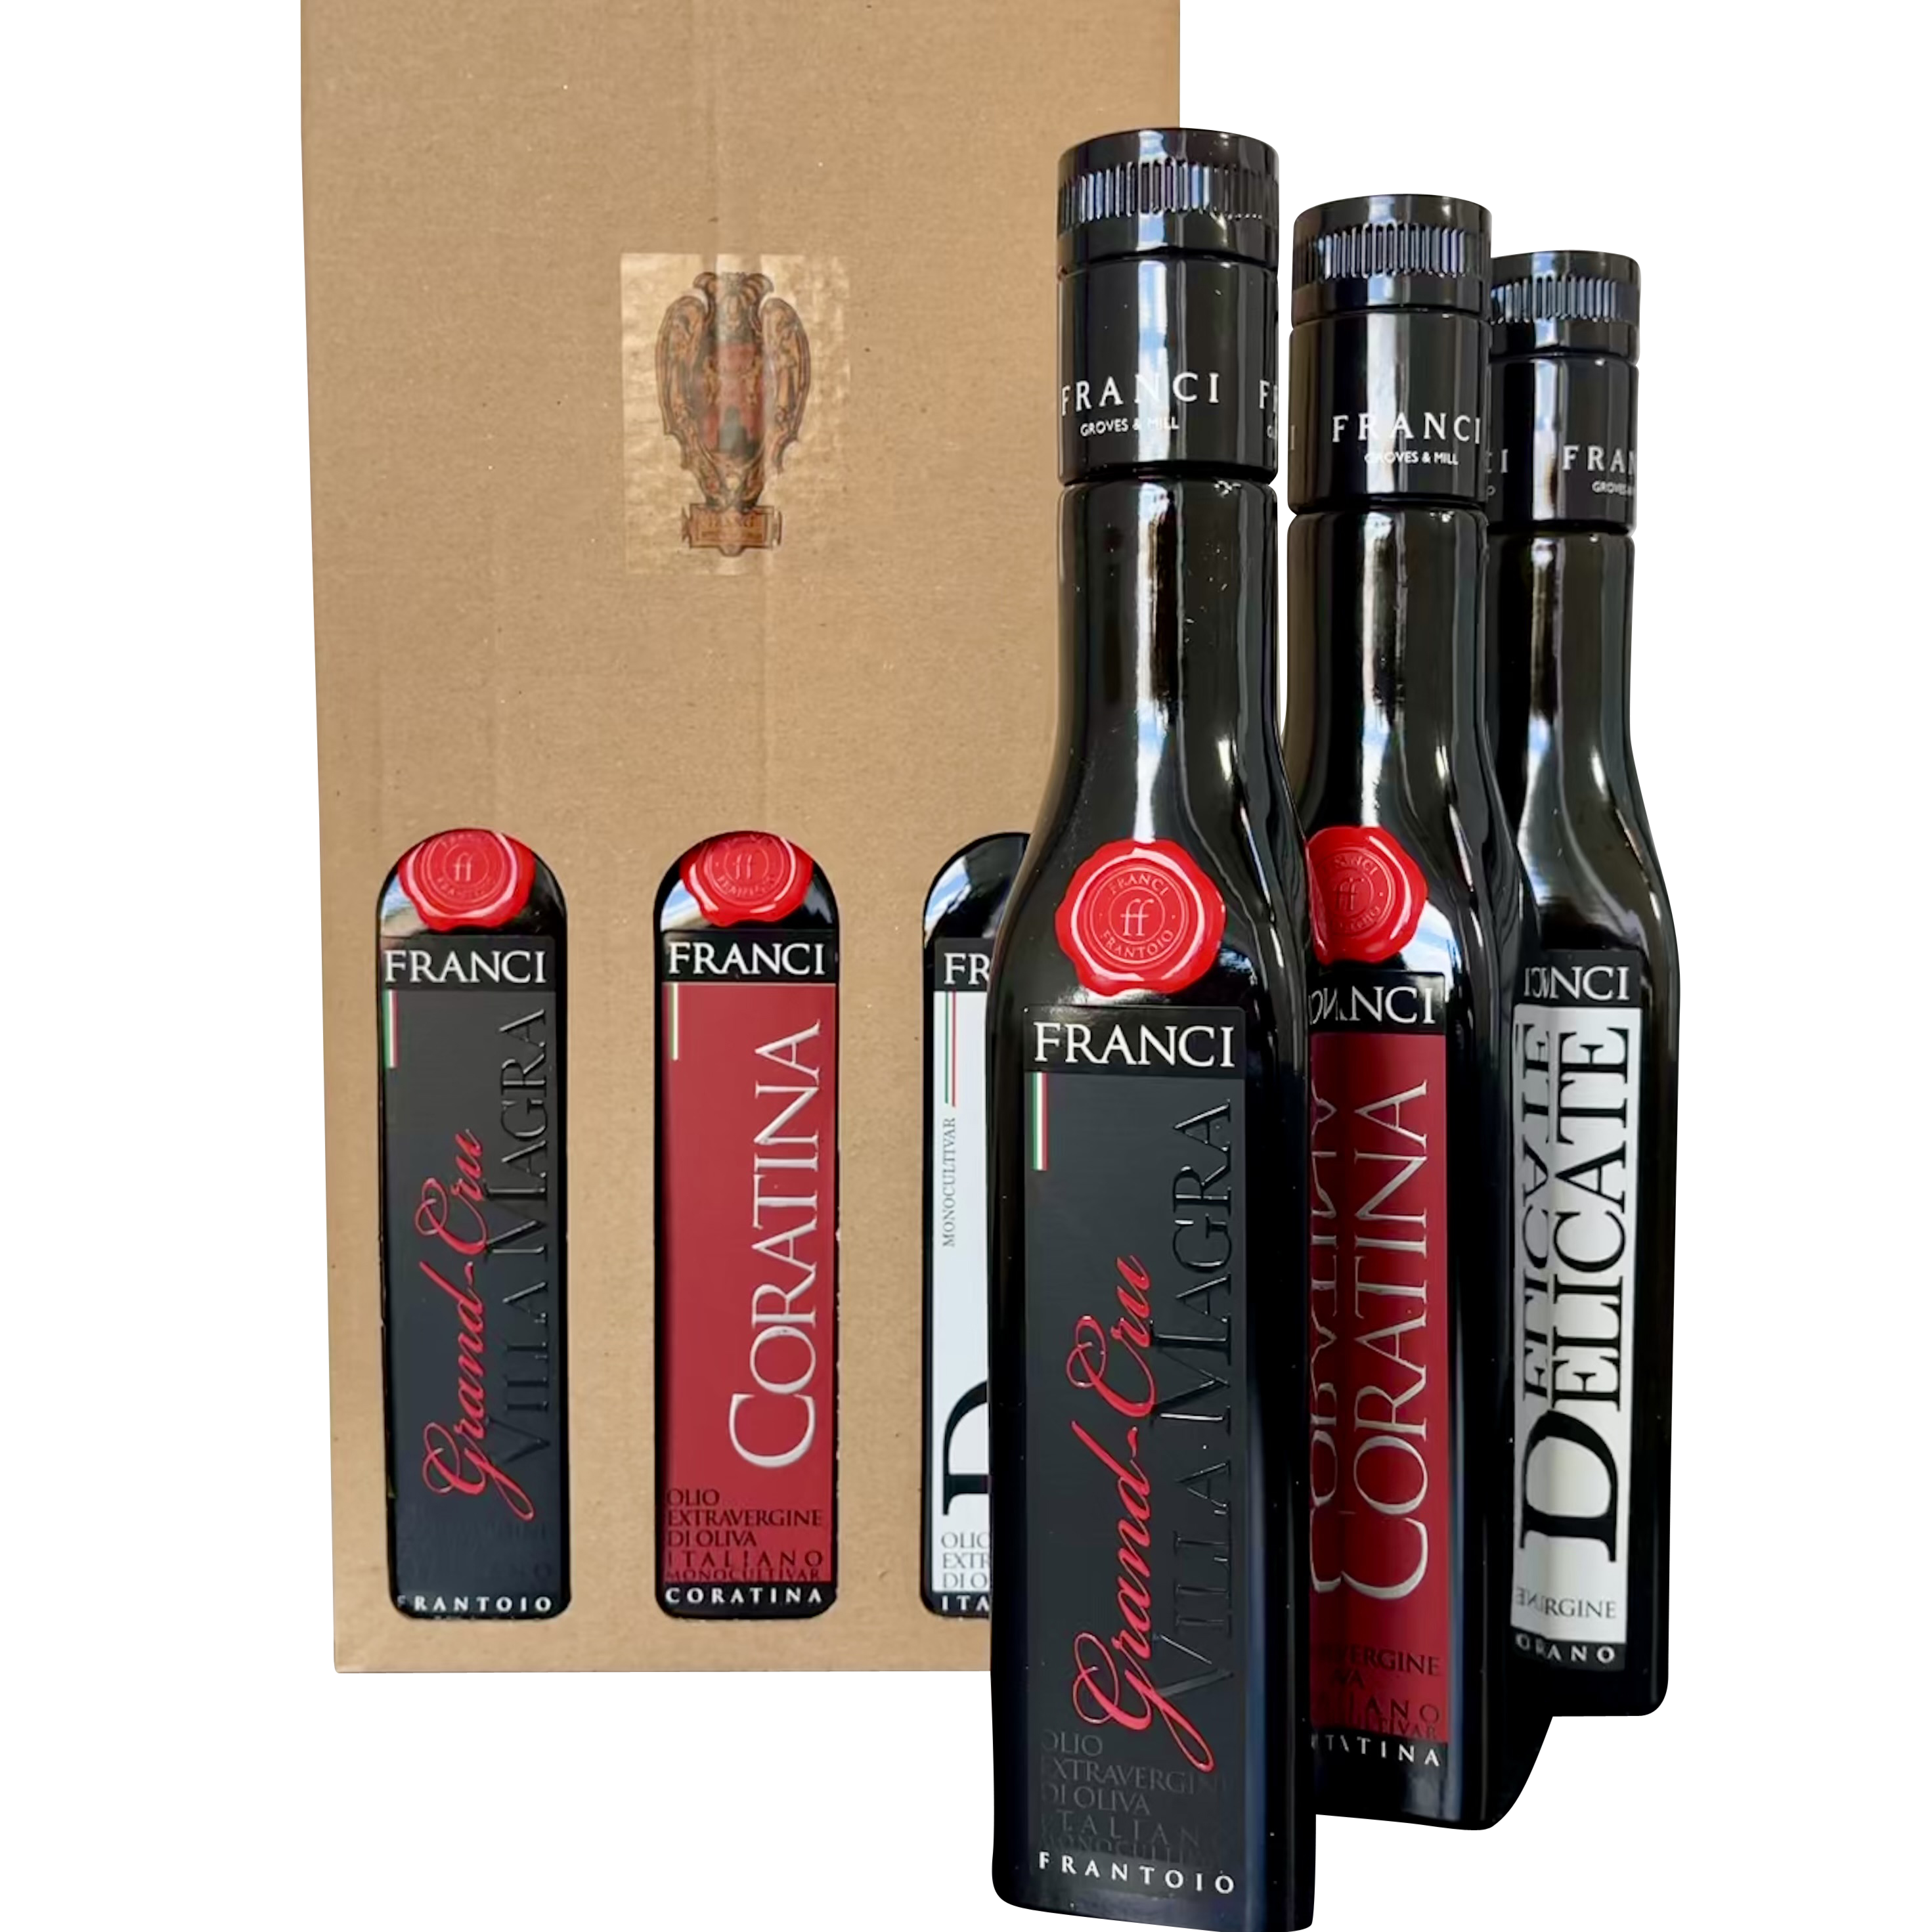 Frantoio Franci Gift Set in Gift Box (3 – Olio2go bottles)